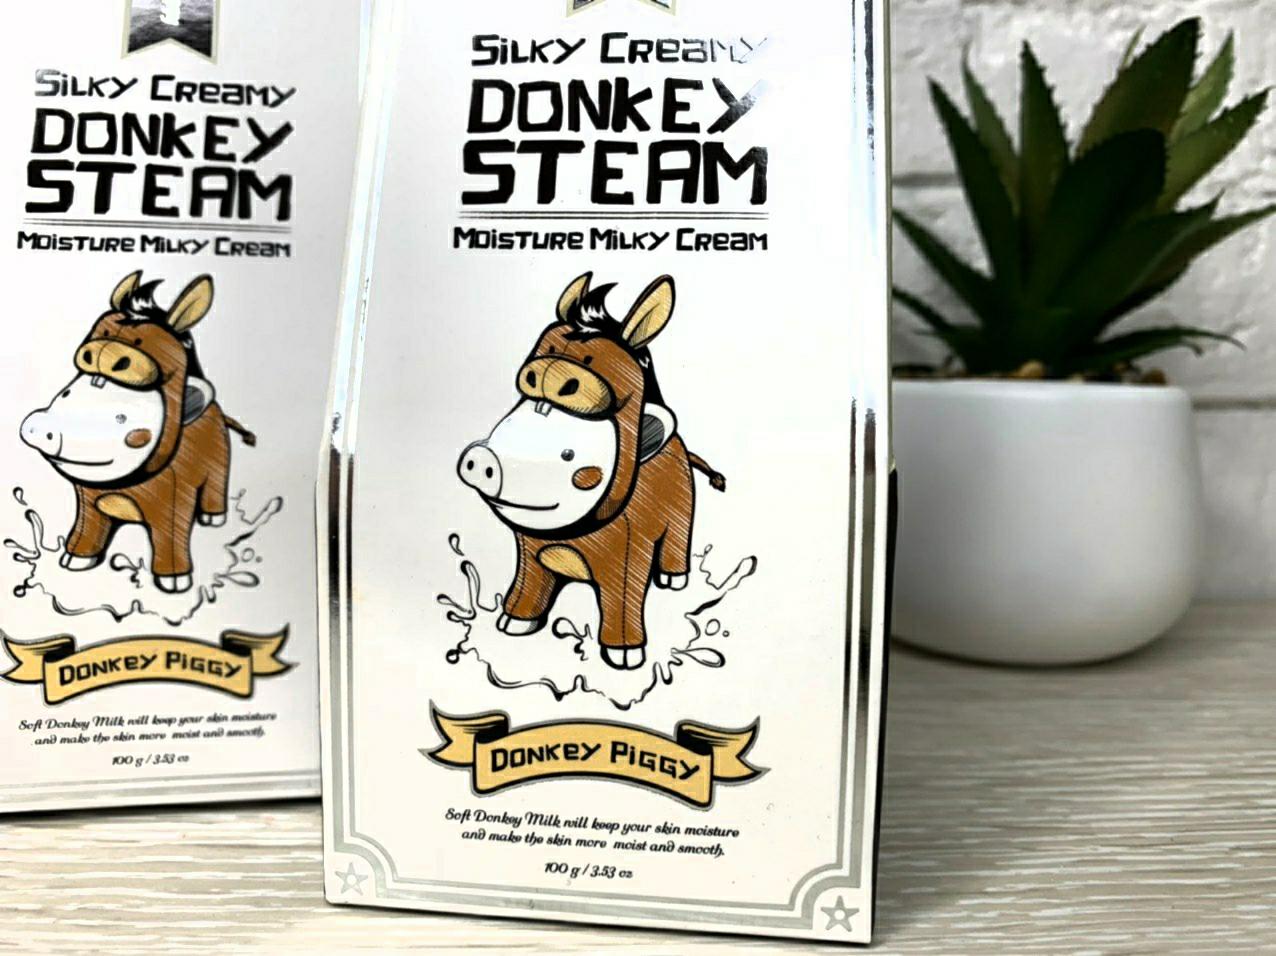 Silky creamy donkey steam cream moisture milky cream фото 113